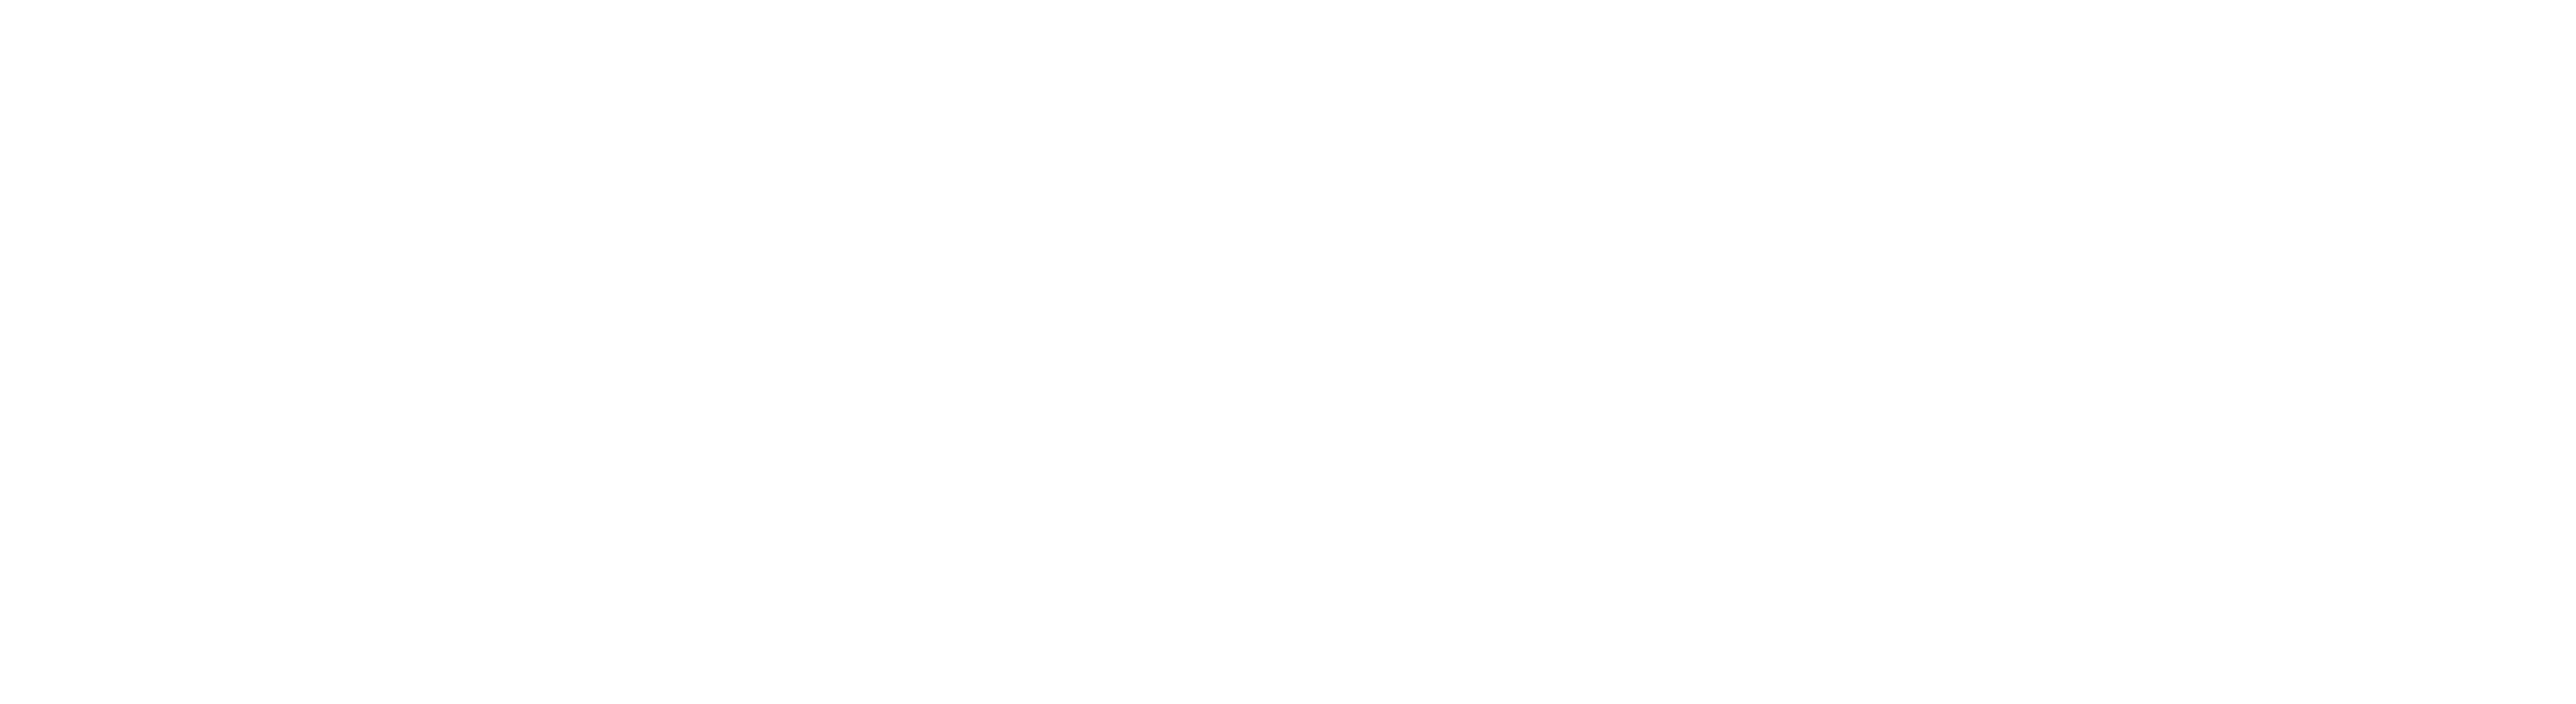 lifterlms_logo-white